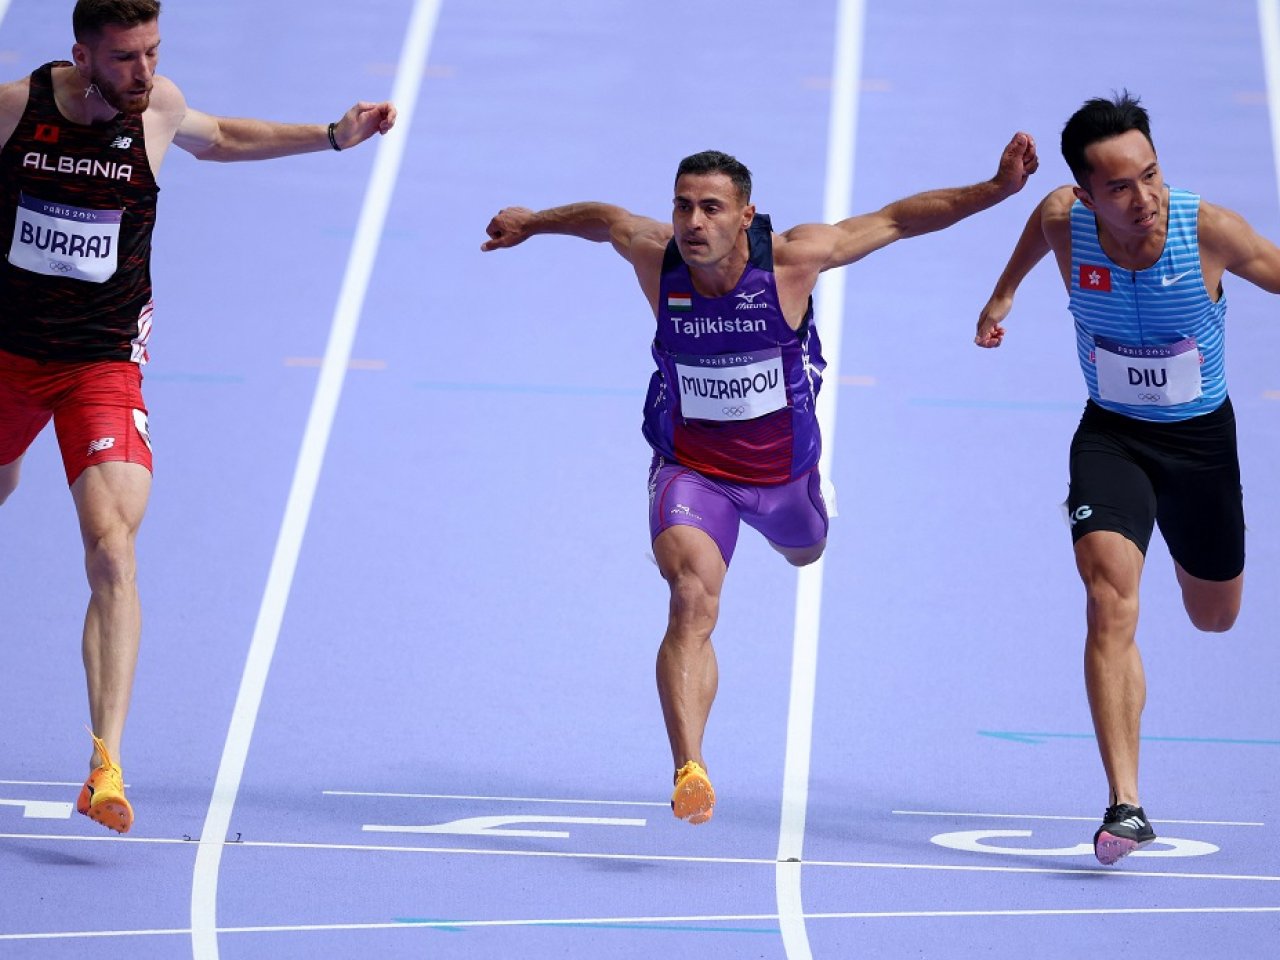 HK sprinter Felix Diu unable to advance in 100m race